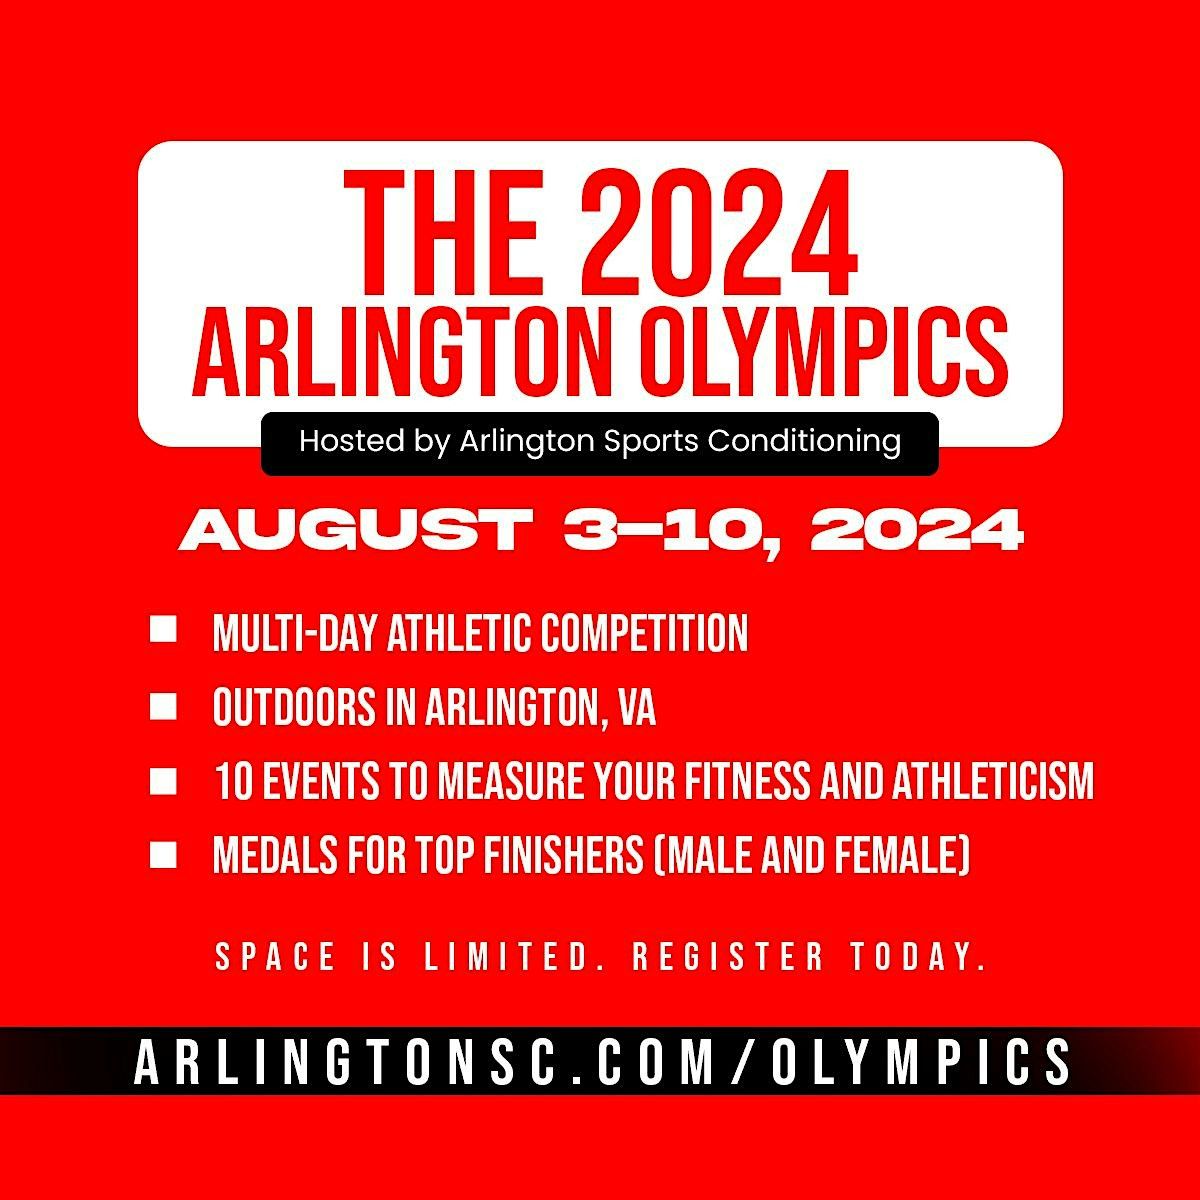 The 2024 Arlington Olympics: Day 2 of 5 (Morning Option)